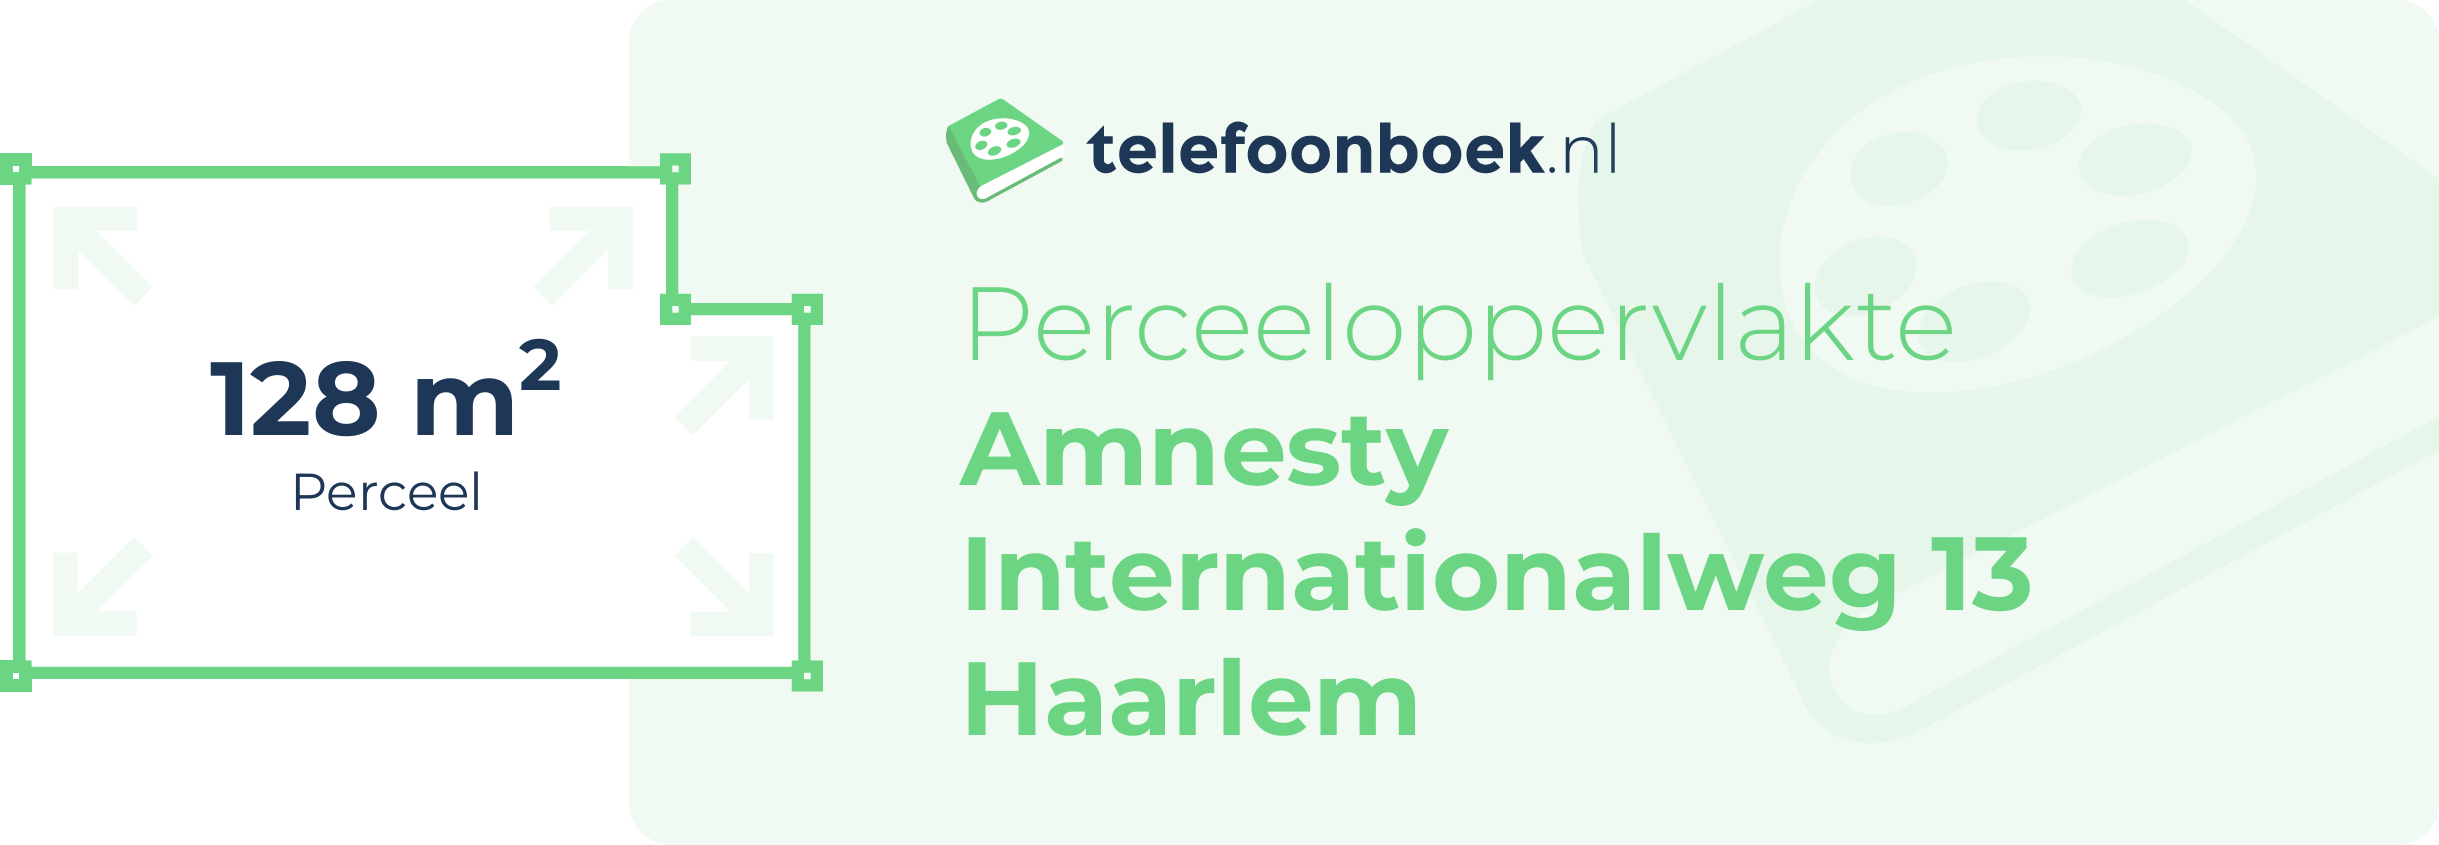 Perceeloppervlakte Amnesty Internationalweg 13 Haarlem